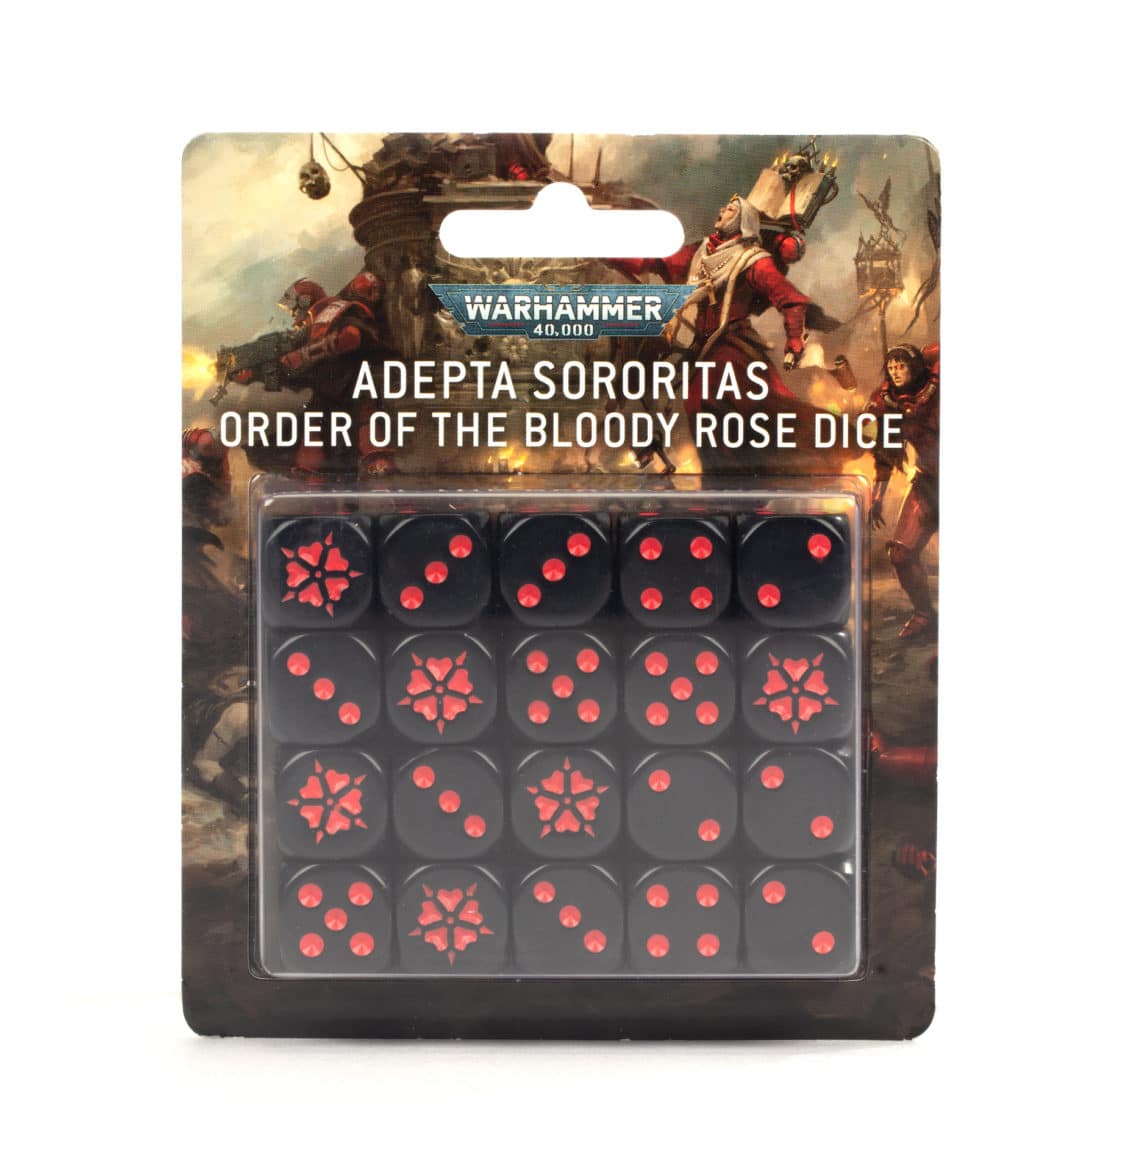 Adepta Sororitas: Order of the Bloody Rose Dice